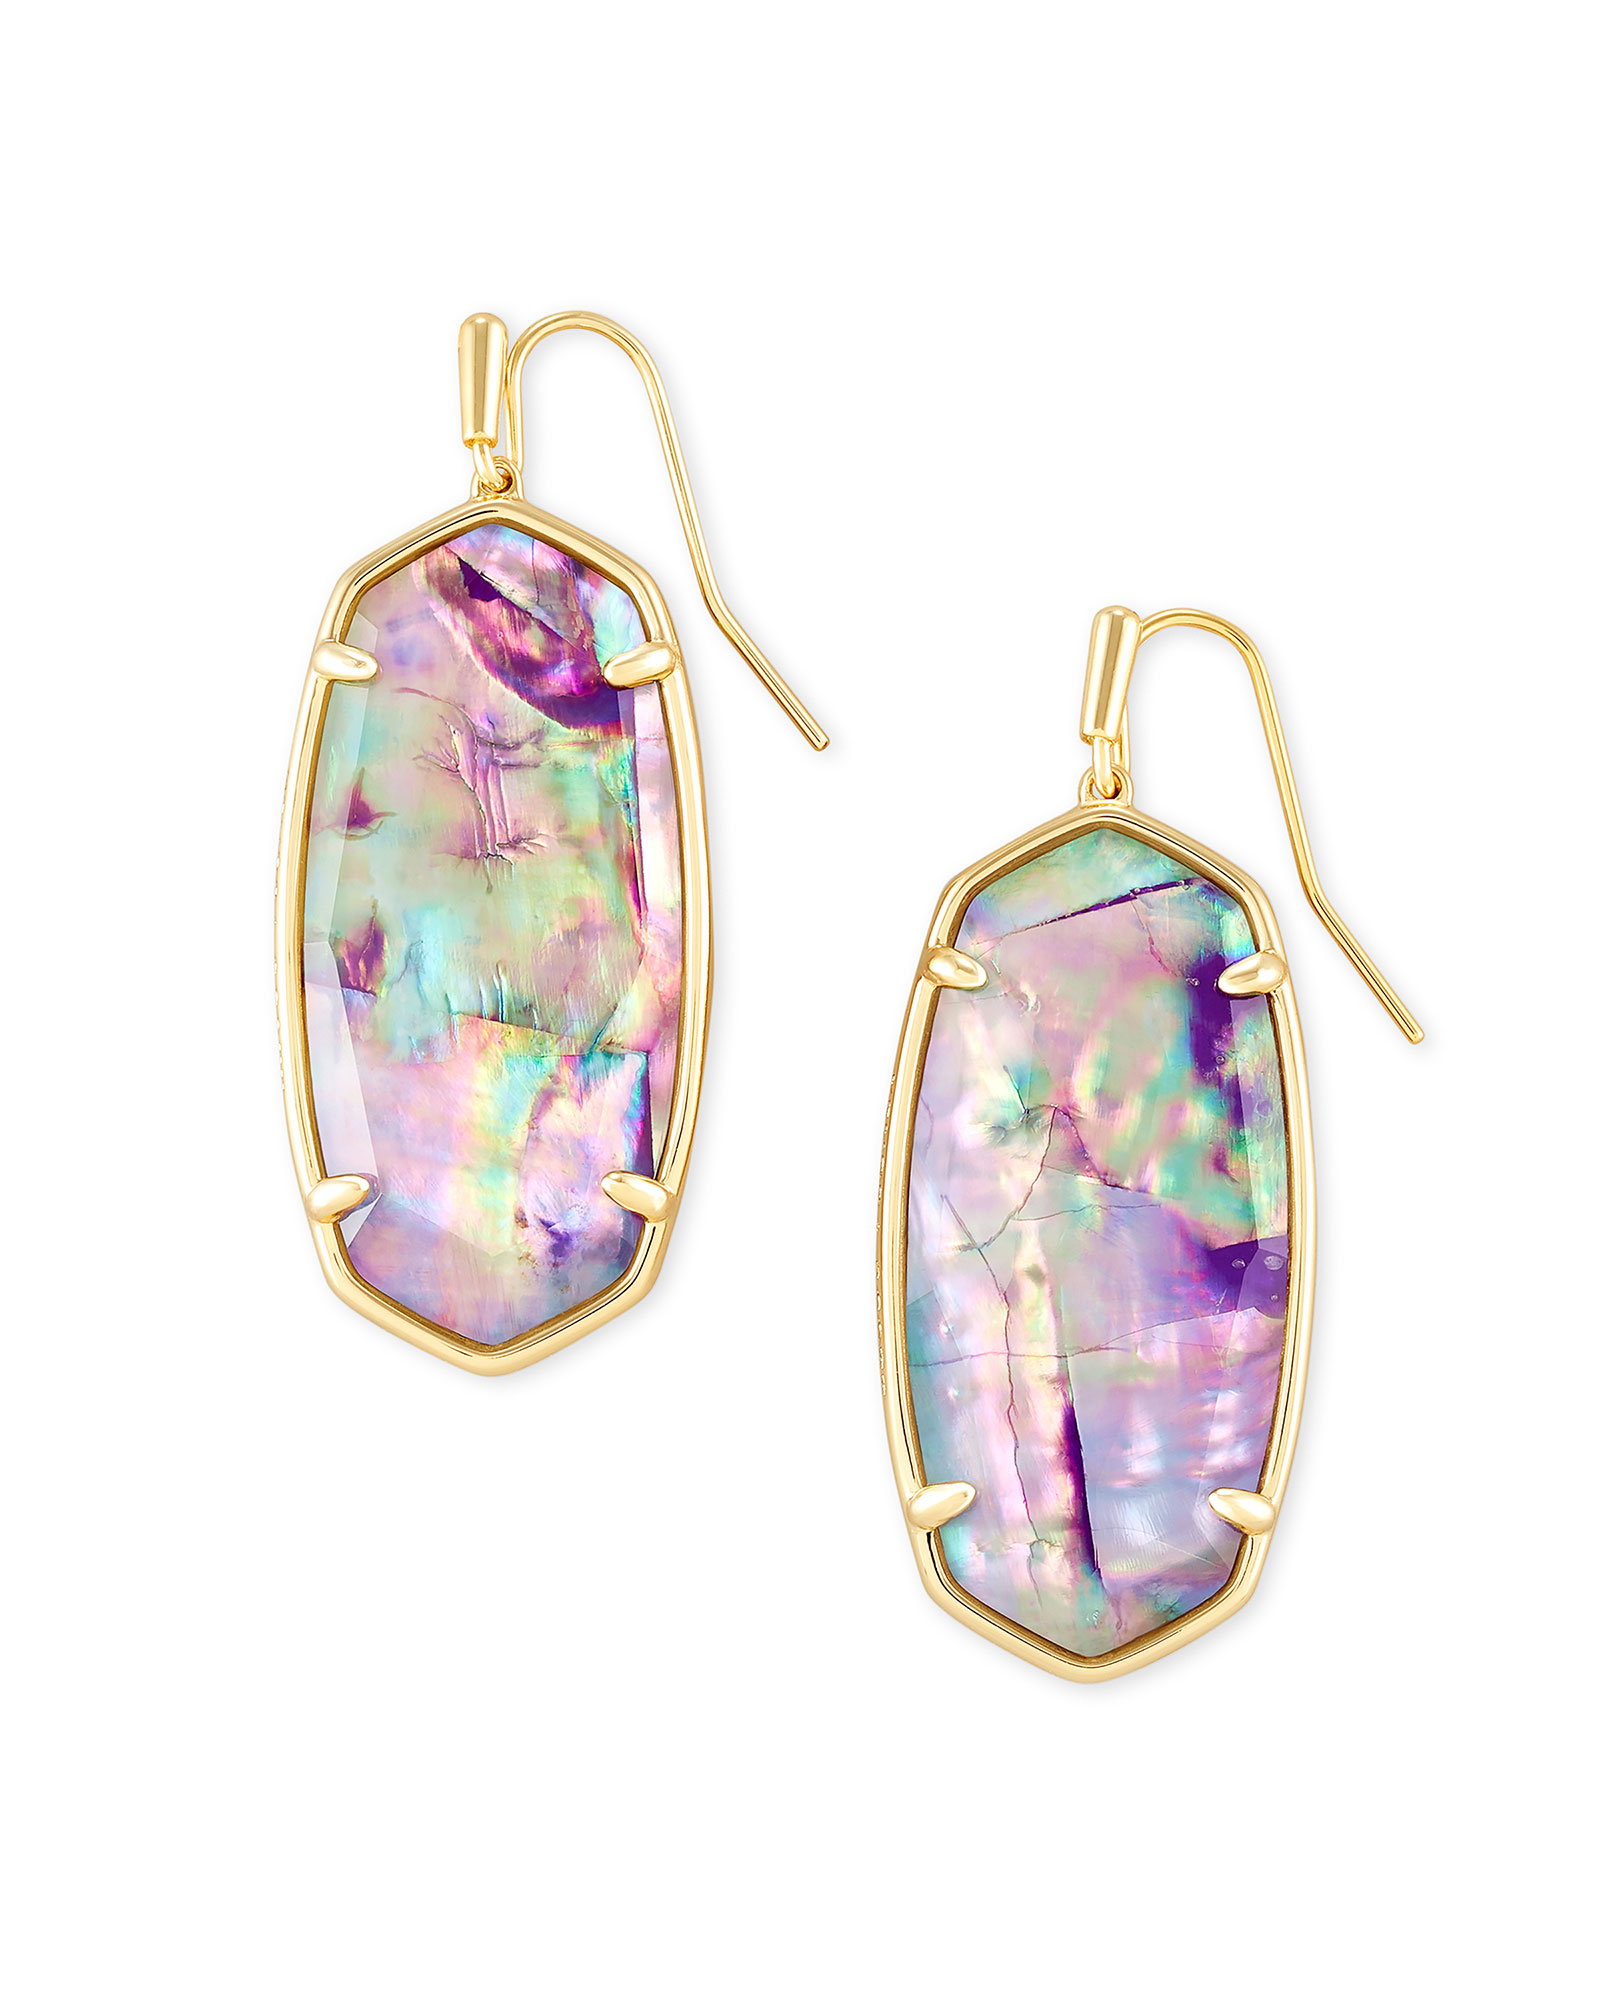 Faceted Elle Gold Drop Earrings in Lilac Abalone | Kendra Scott